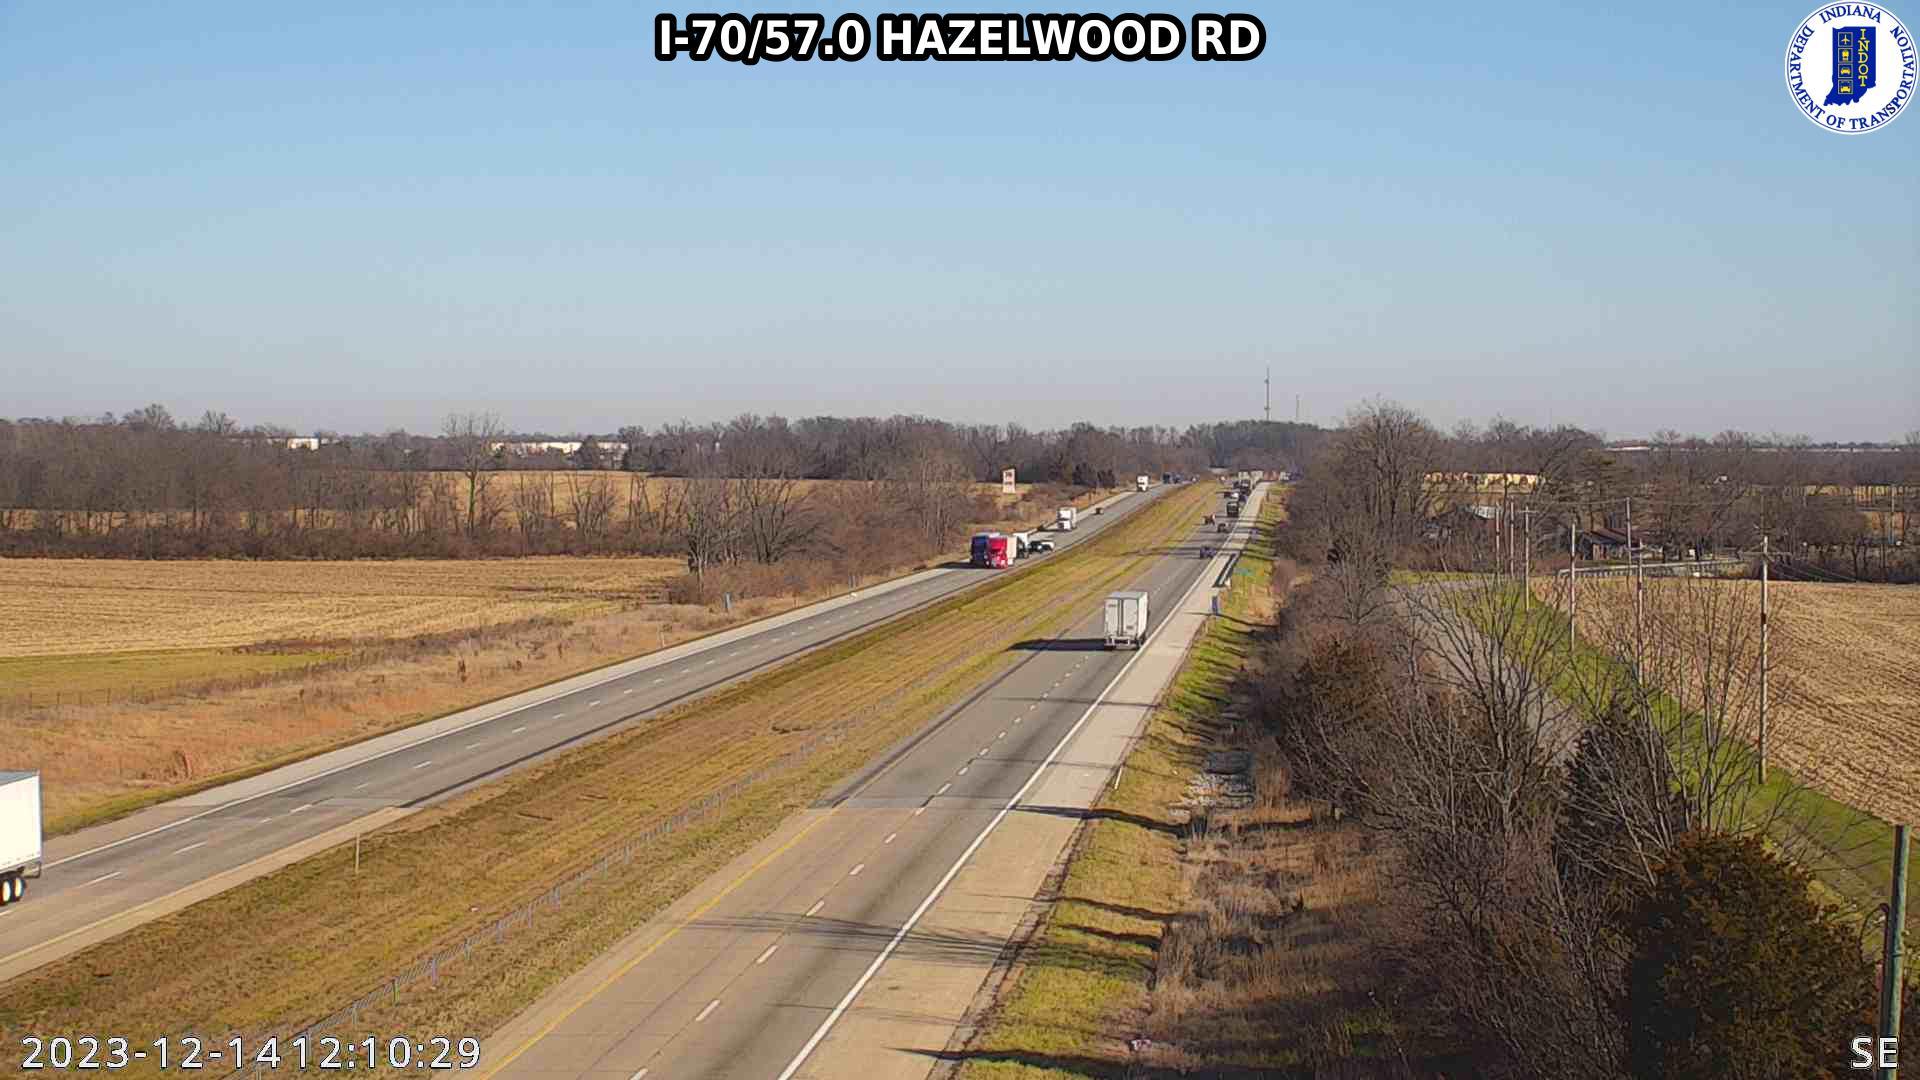 Traffic Cam Hazelwood: I-70: I-70/57.0 - RD Player